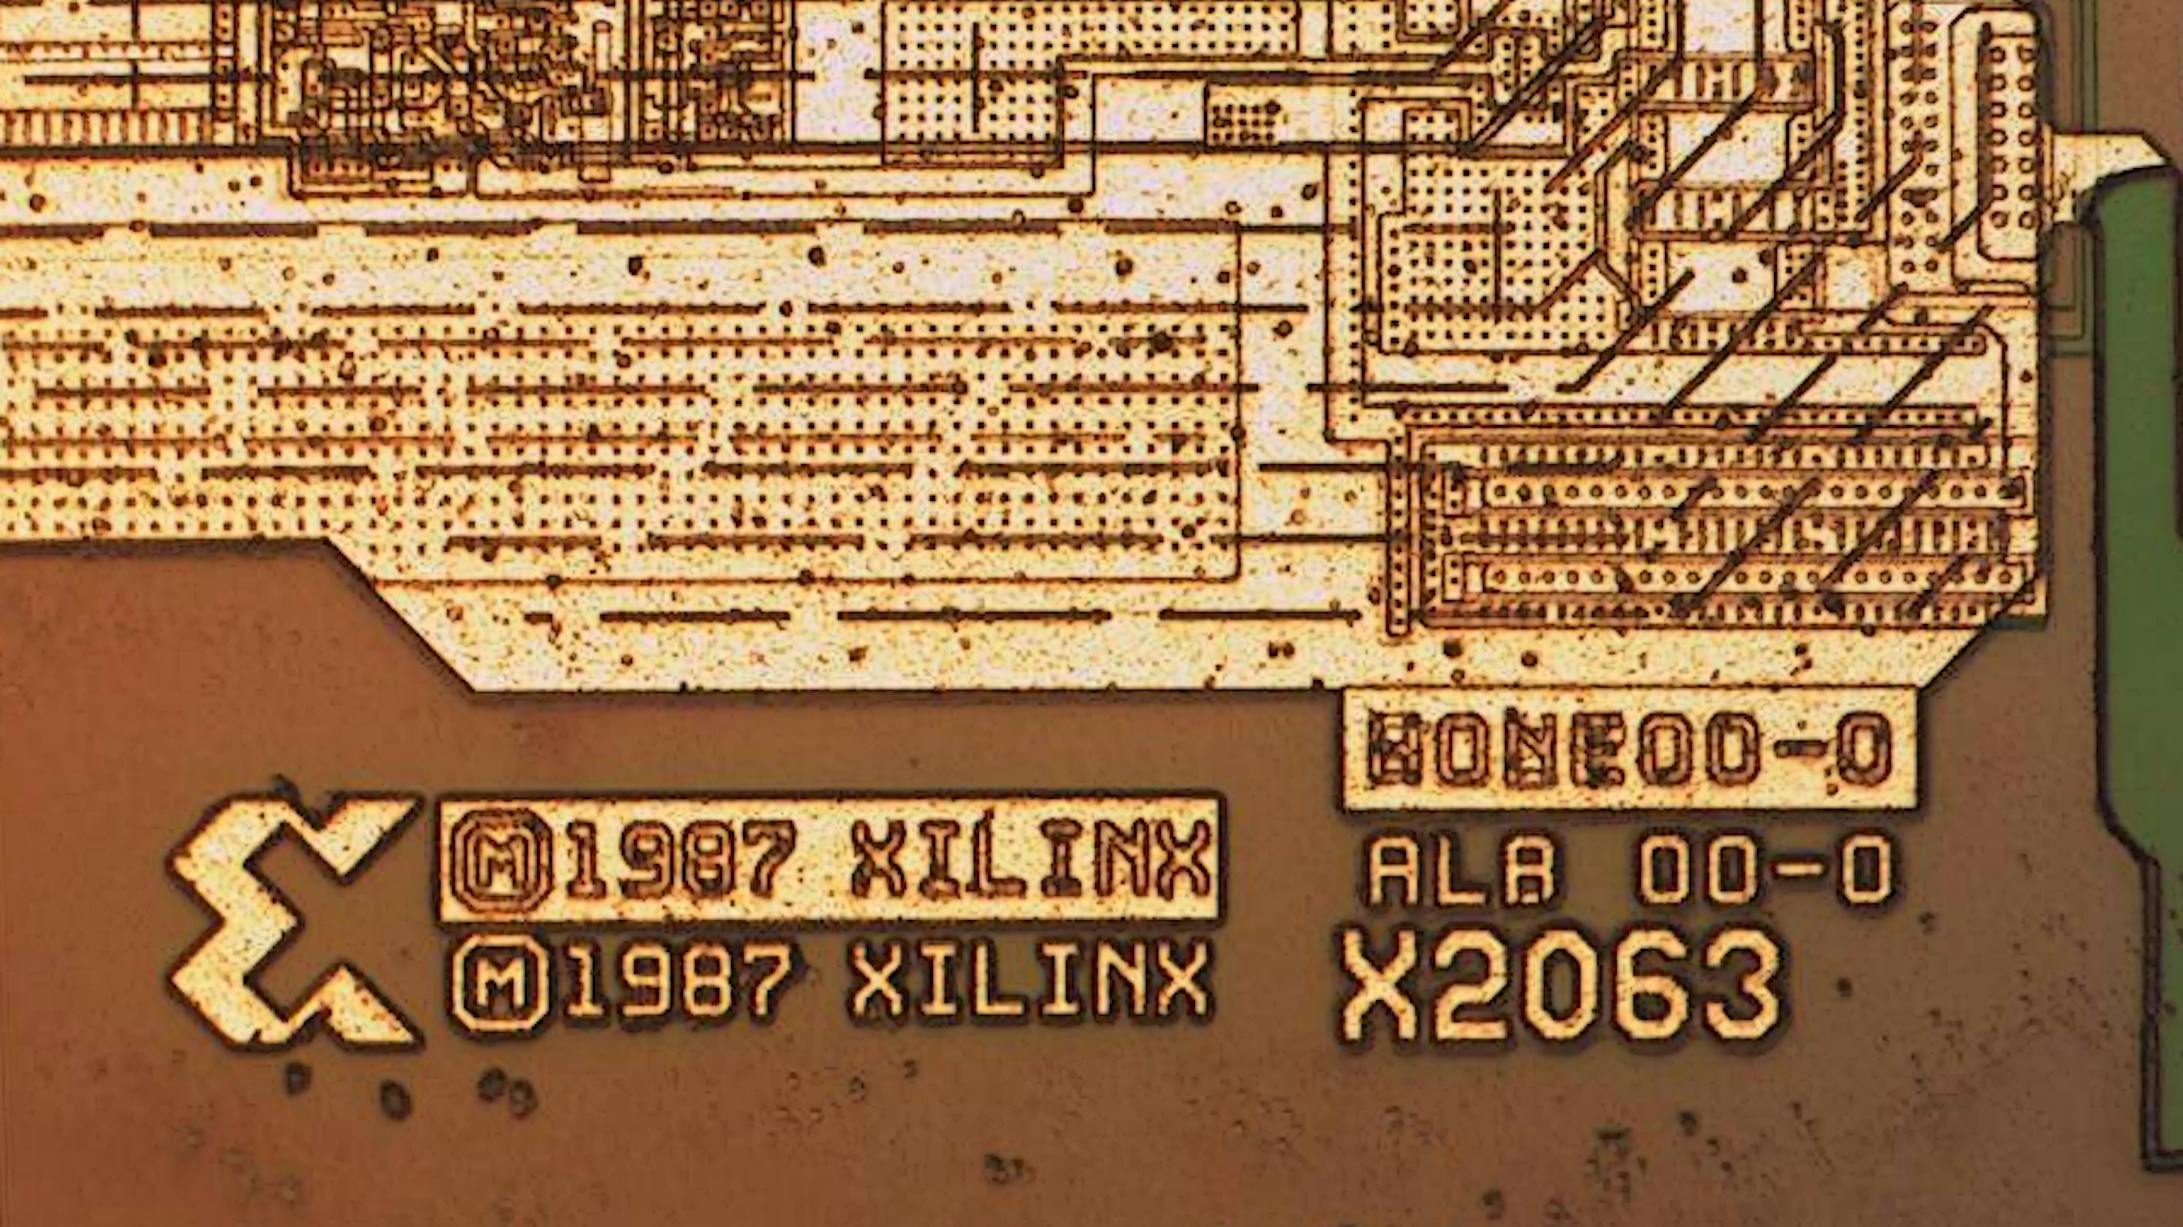 Ken Shirriff Reverse Engineers the Xilinx XC2064, the World's